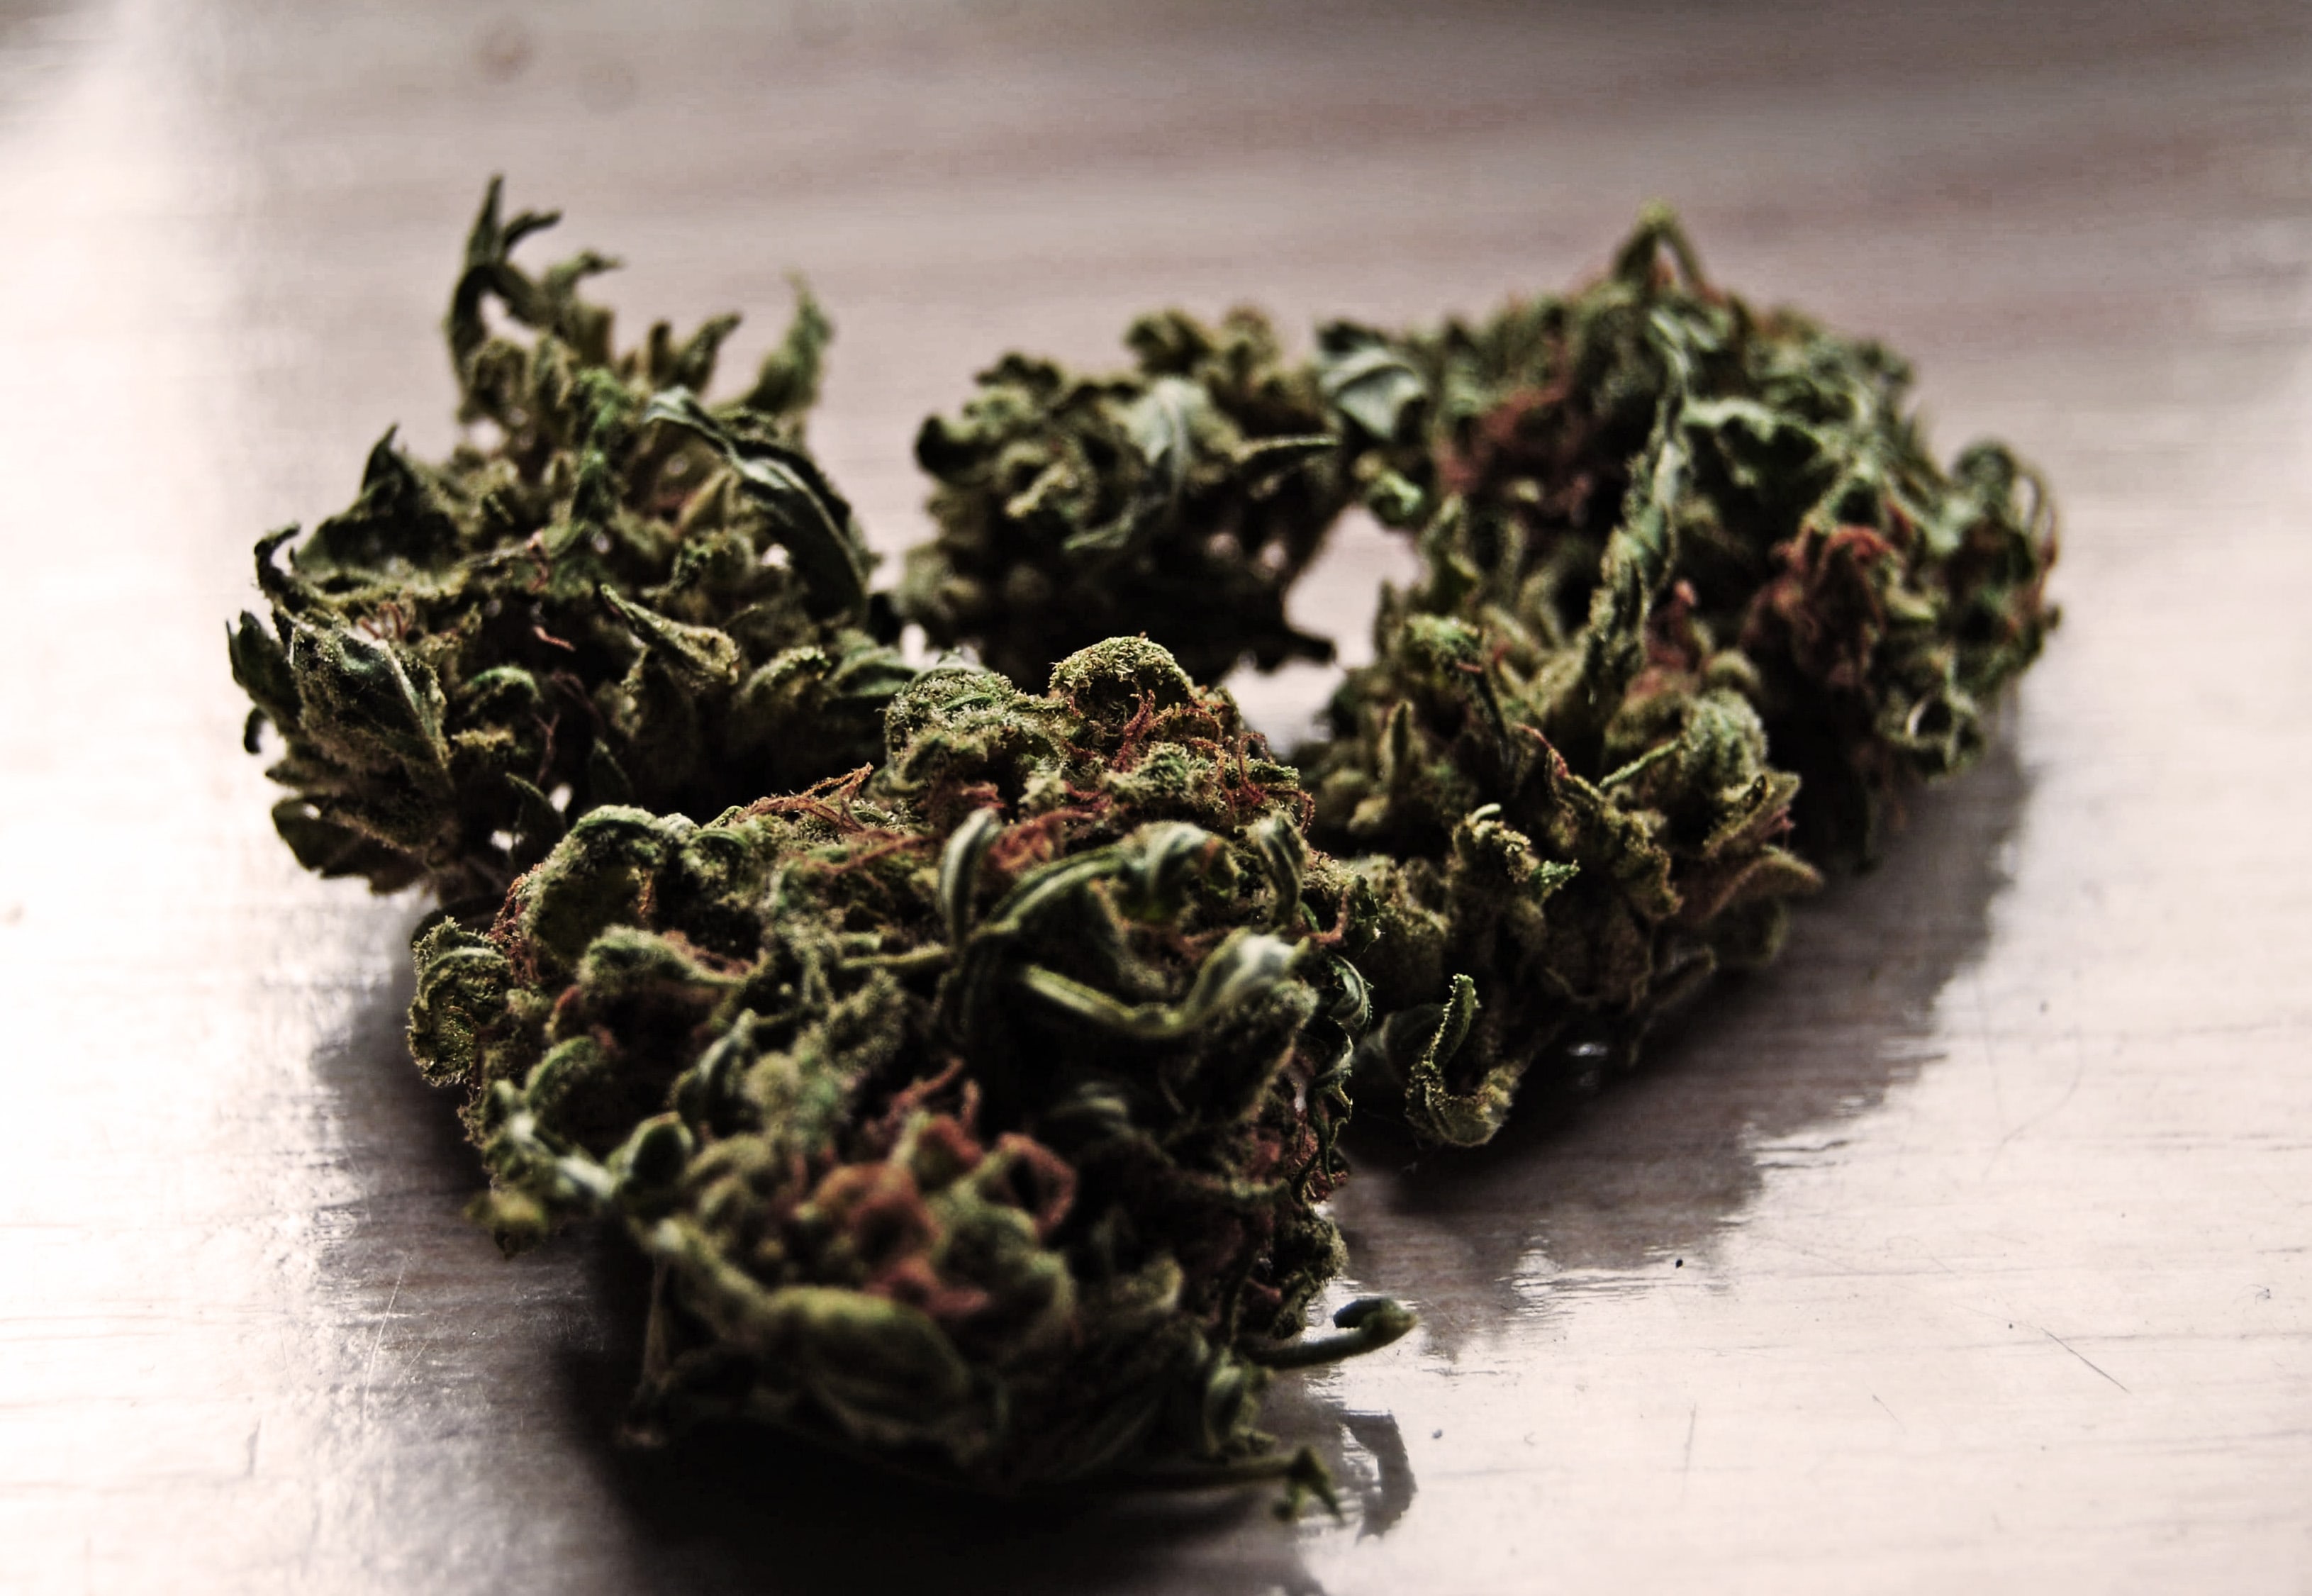 planta-marihuana-mota-mariguana-cannabis-oms